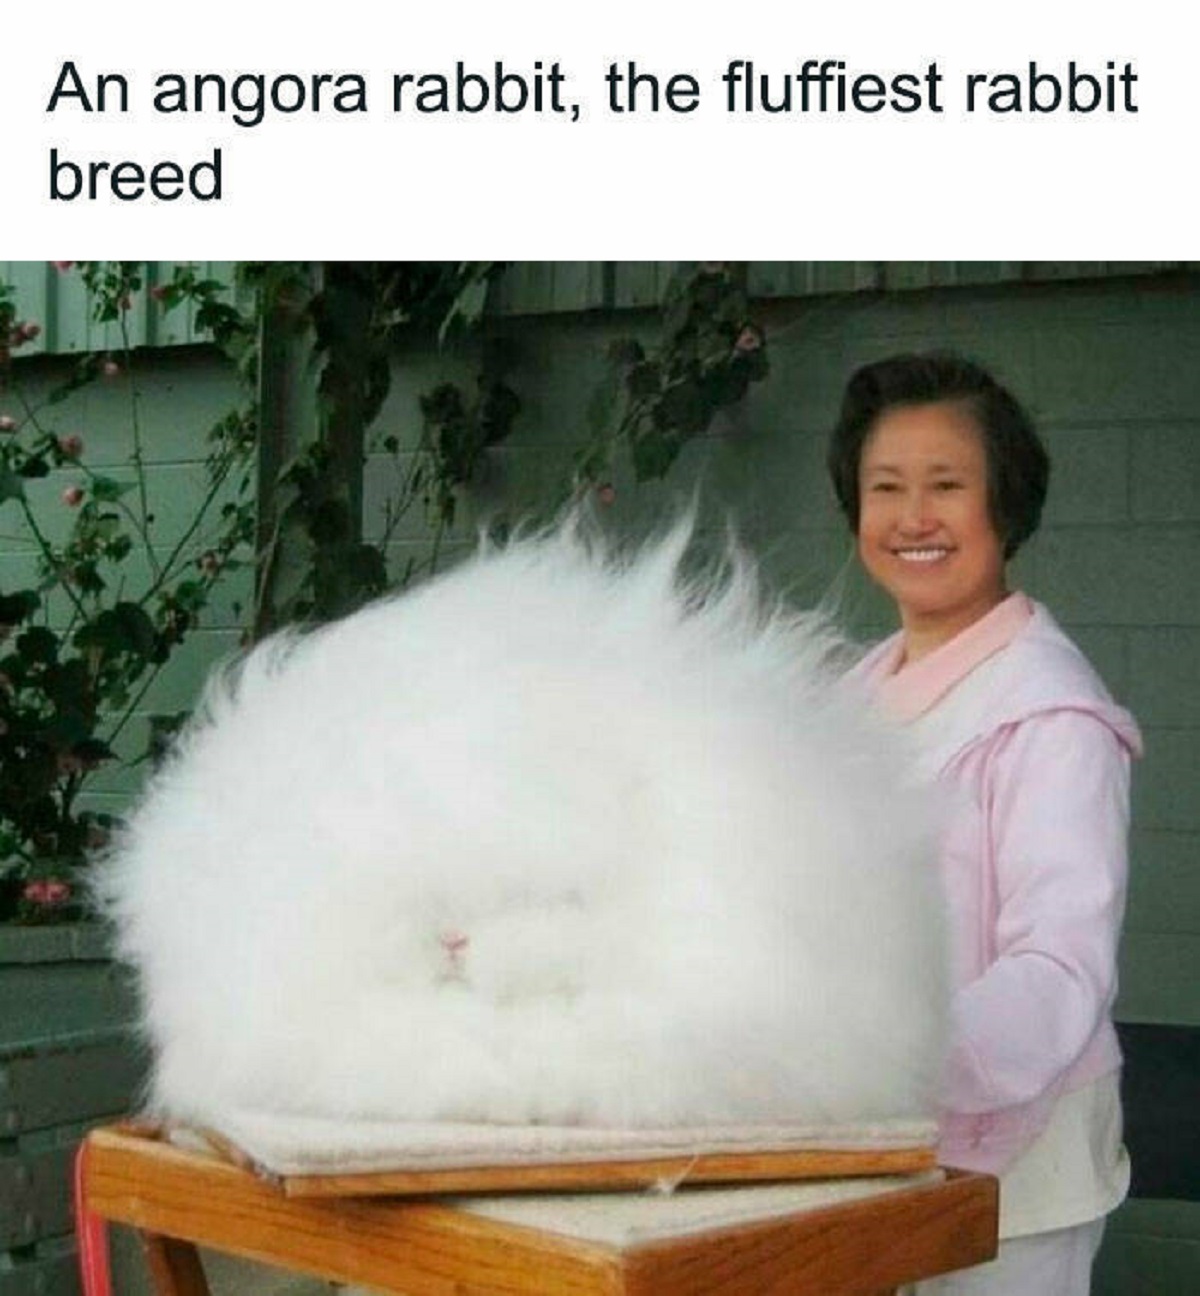 angora wool - An angora rabbit, the fluffiest rabbit breed